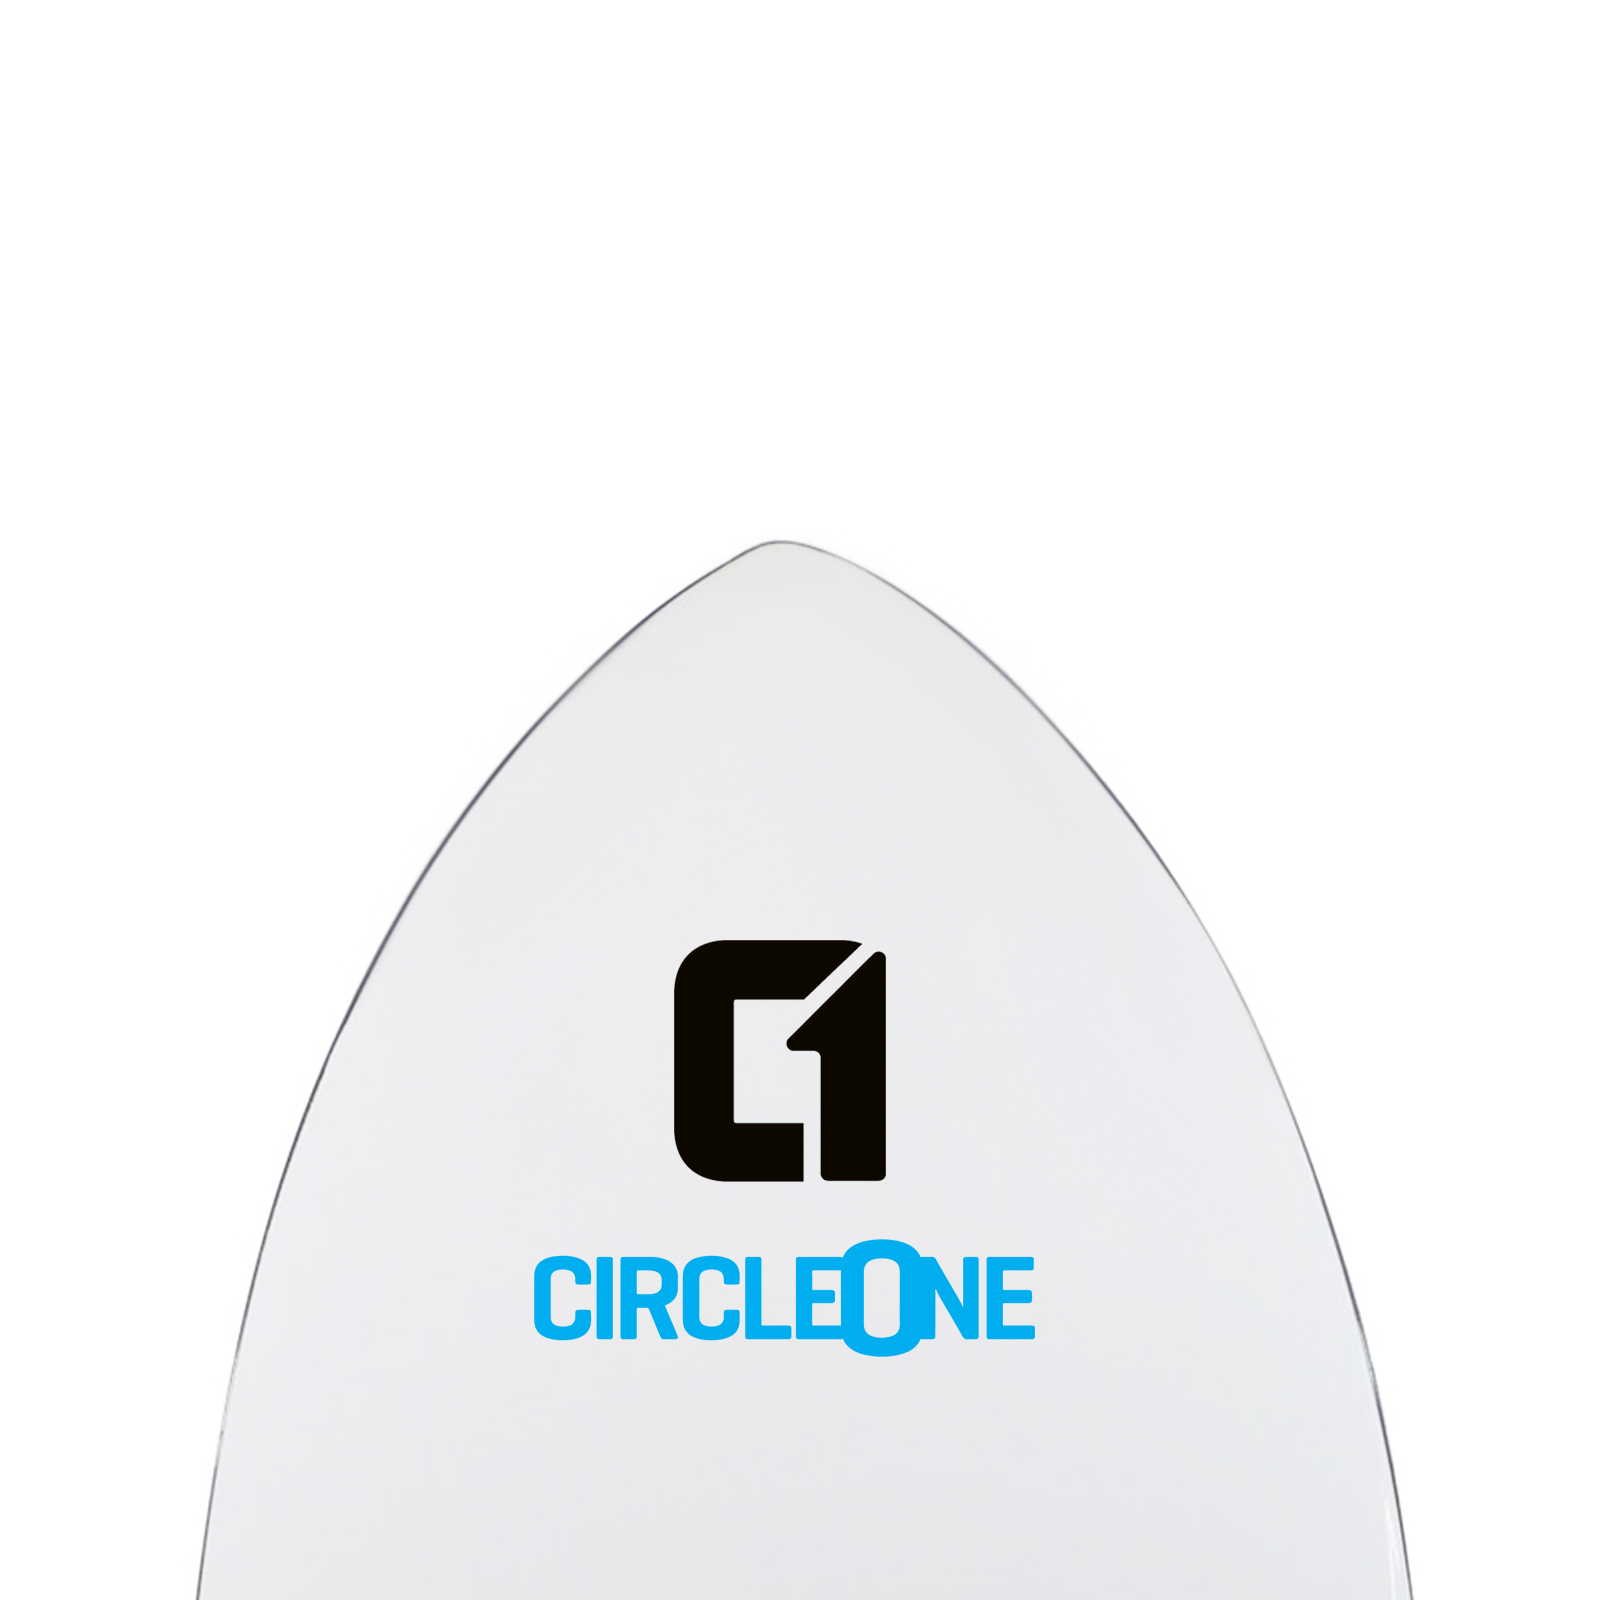 52" Circle One 2020 Epoxy Fibreglass Premium Foam Skimboard for Wave Riding 